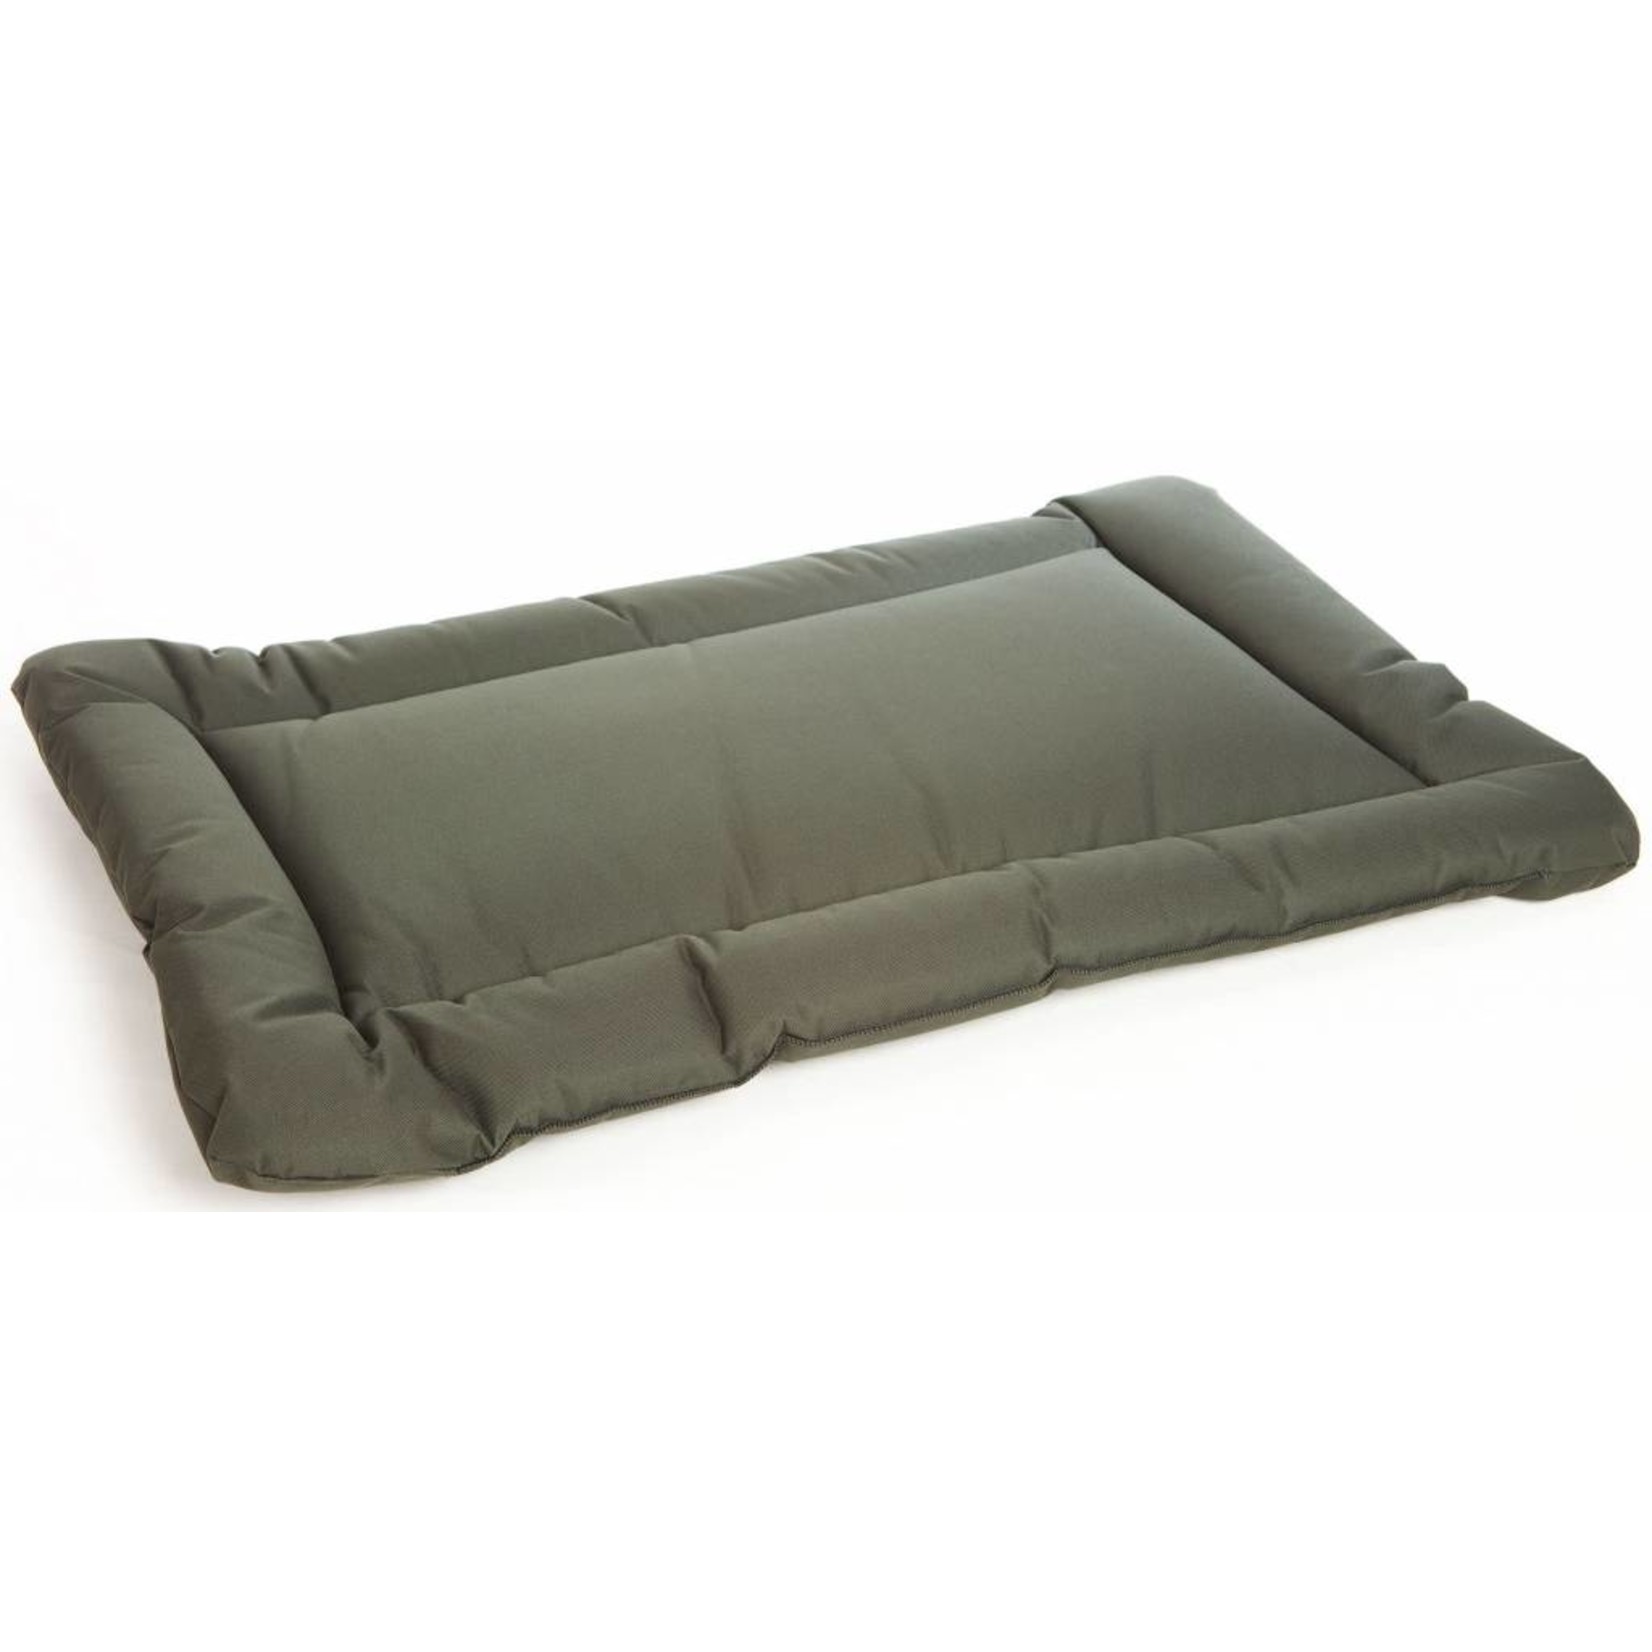 Pets & Leisure Country Dog Heavy Duty Waterproof Rectangular Cushion Pad, Green